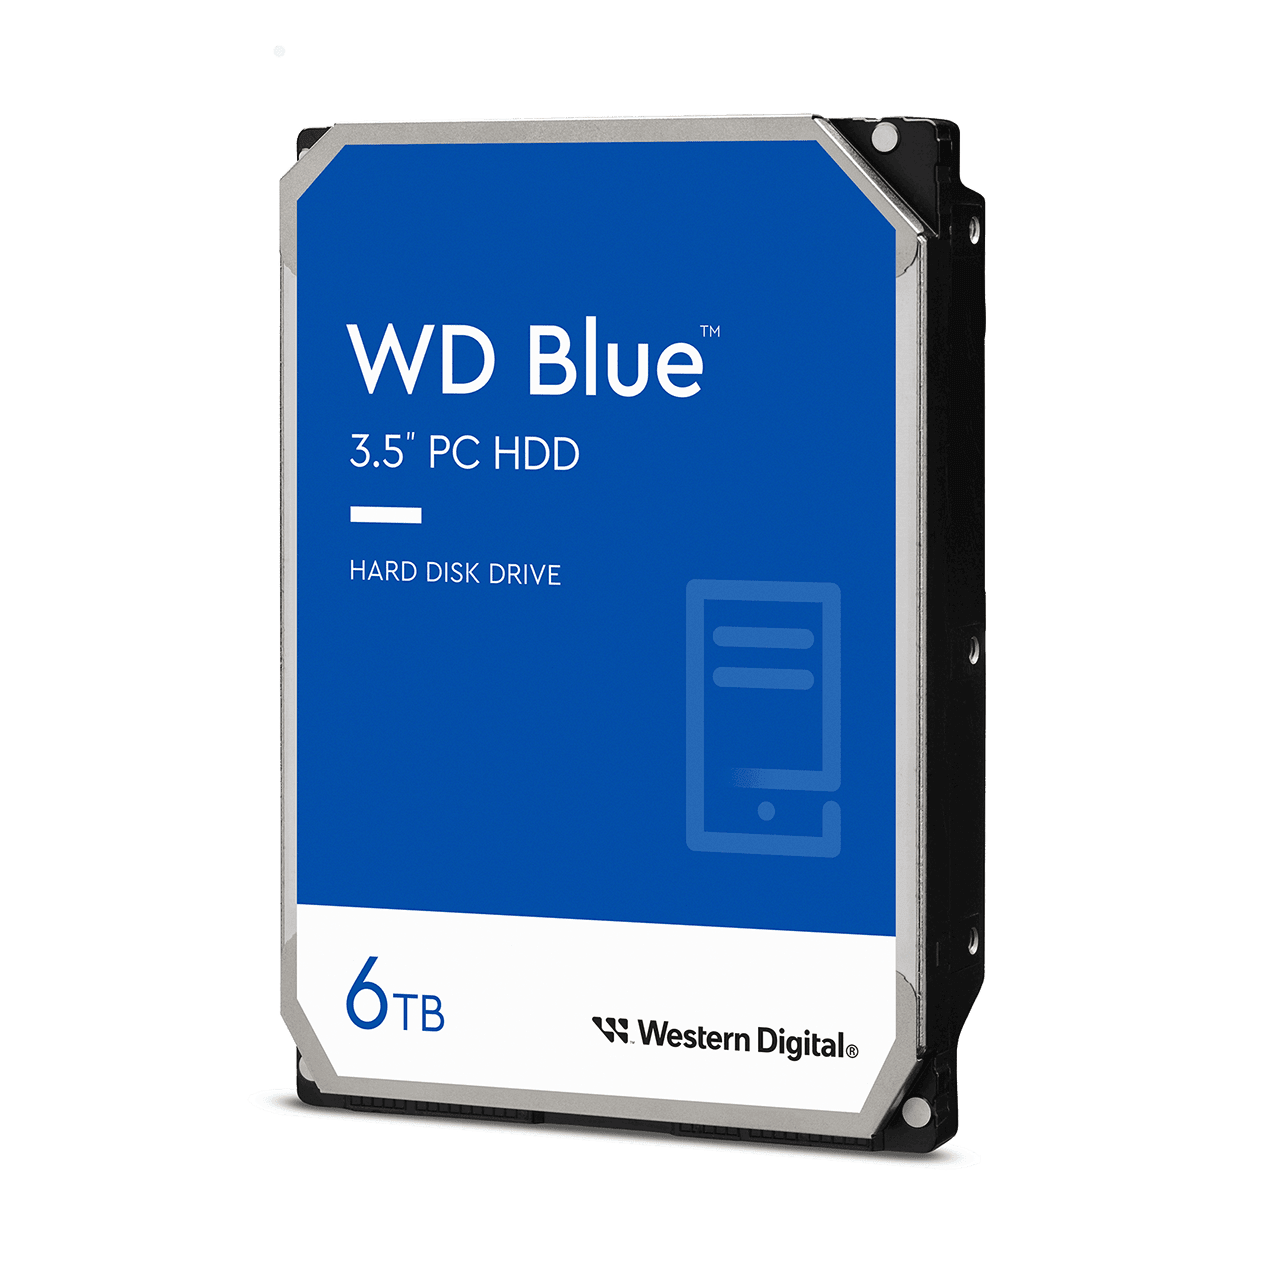 WD Blue 3.5in PC Hard Drive - 6TB - Image12